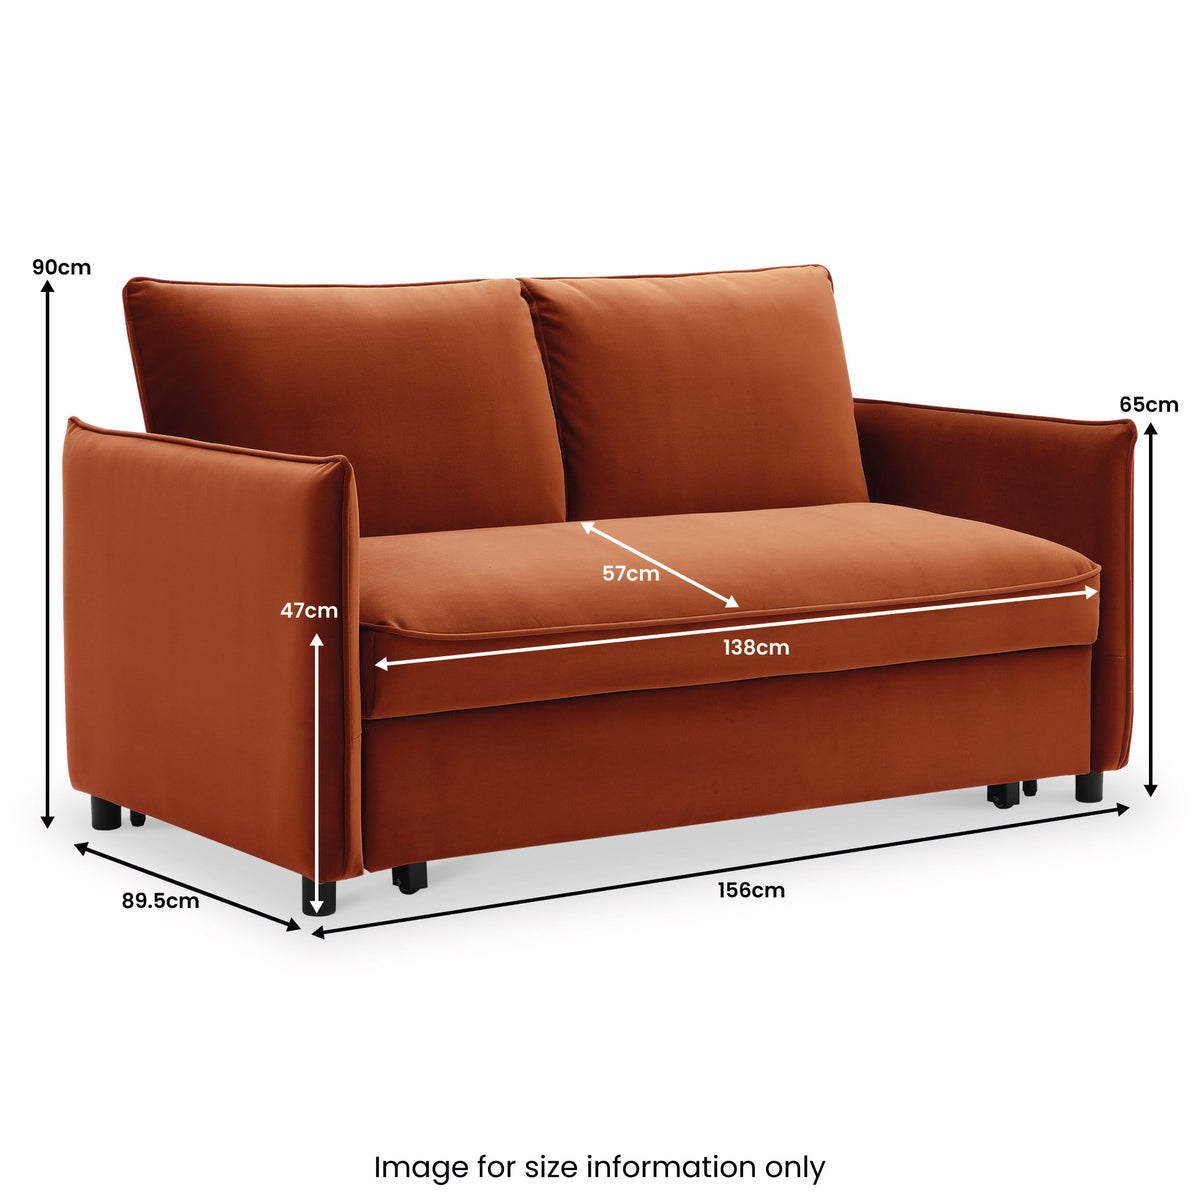 Thalia 2 Seater Burnt Orange Pop Up Sofa Bed Dimensions by Roseland Furniture